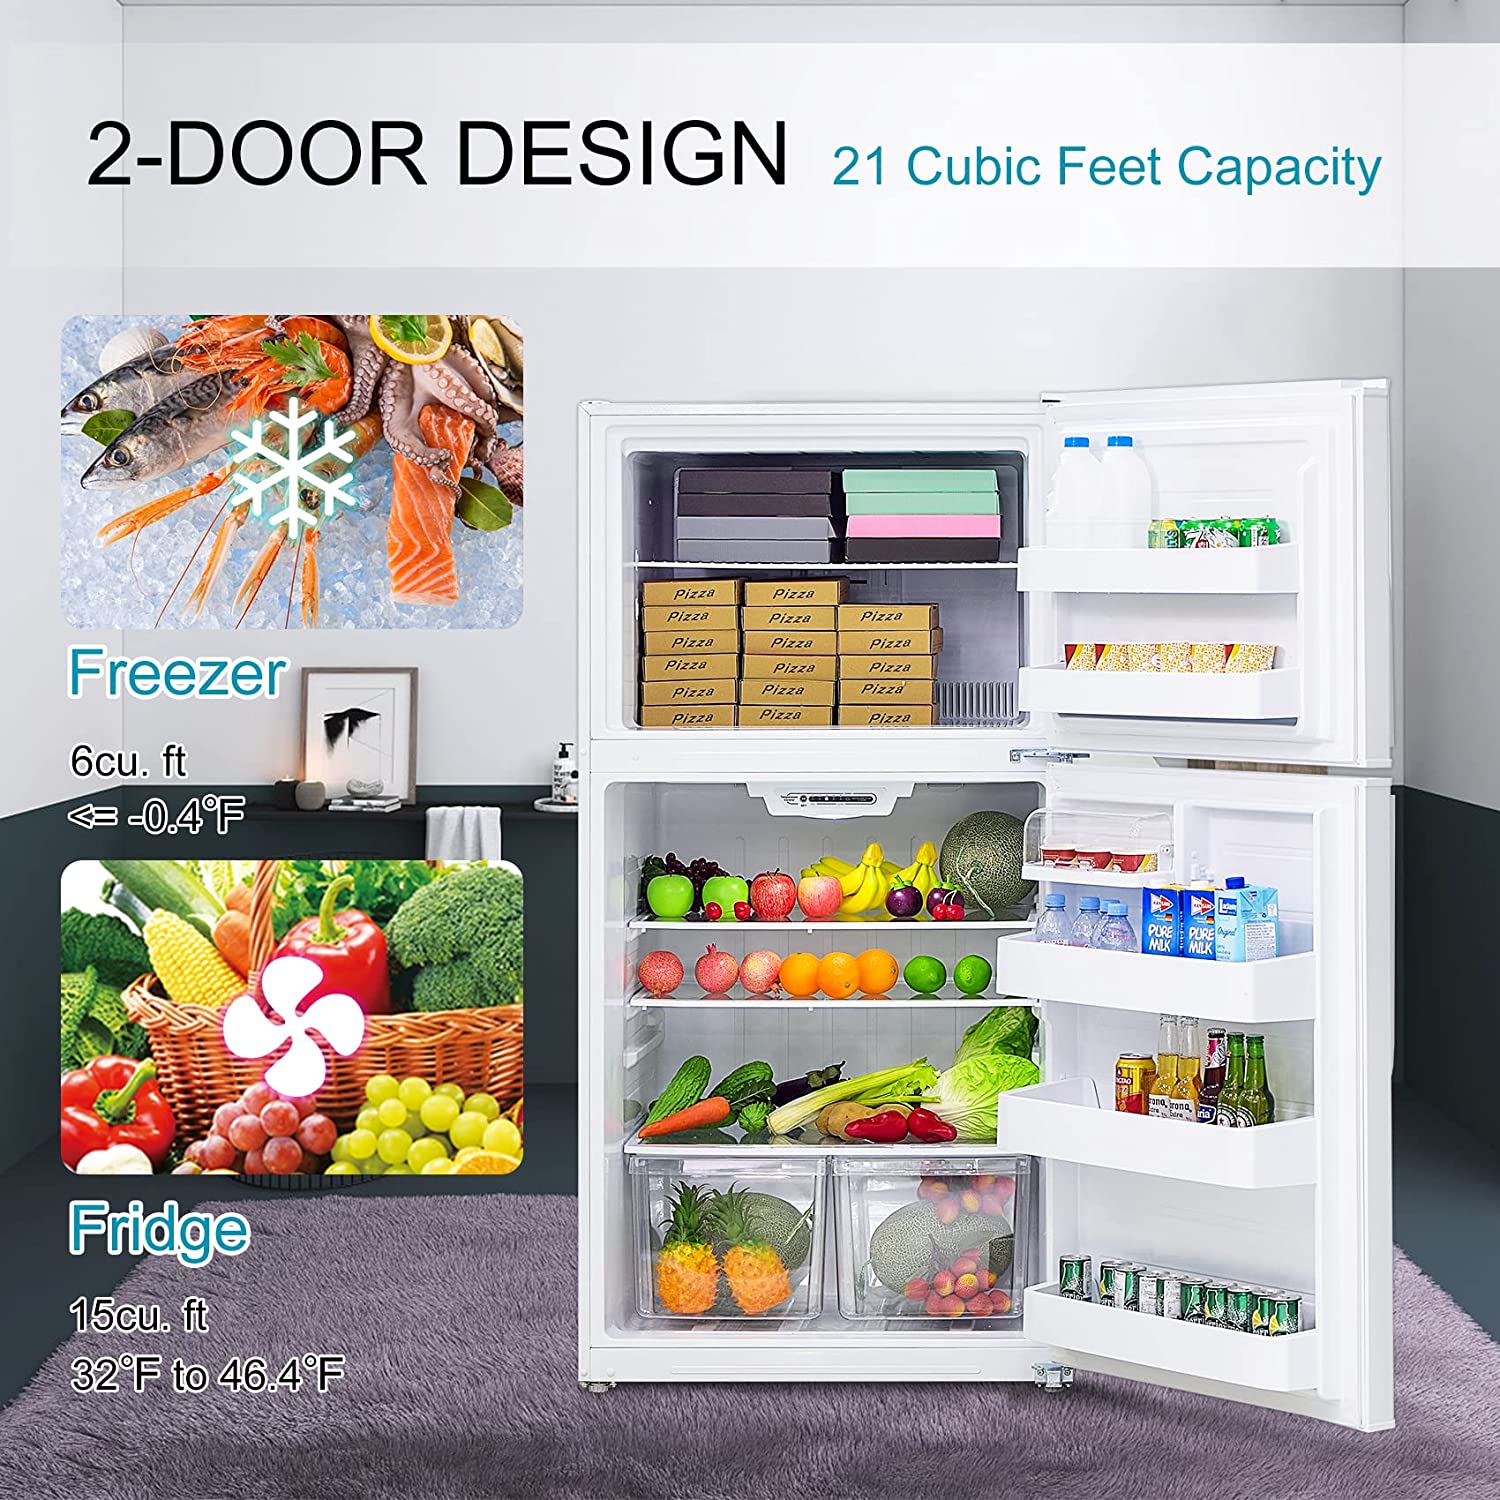 Smad appliances' 2-door refrigerator design view